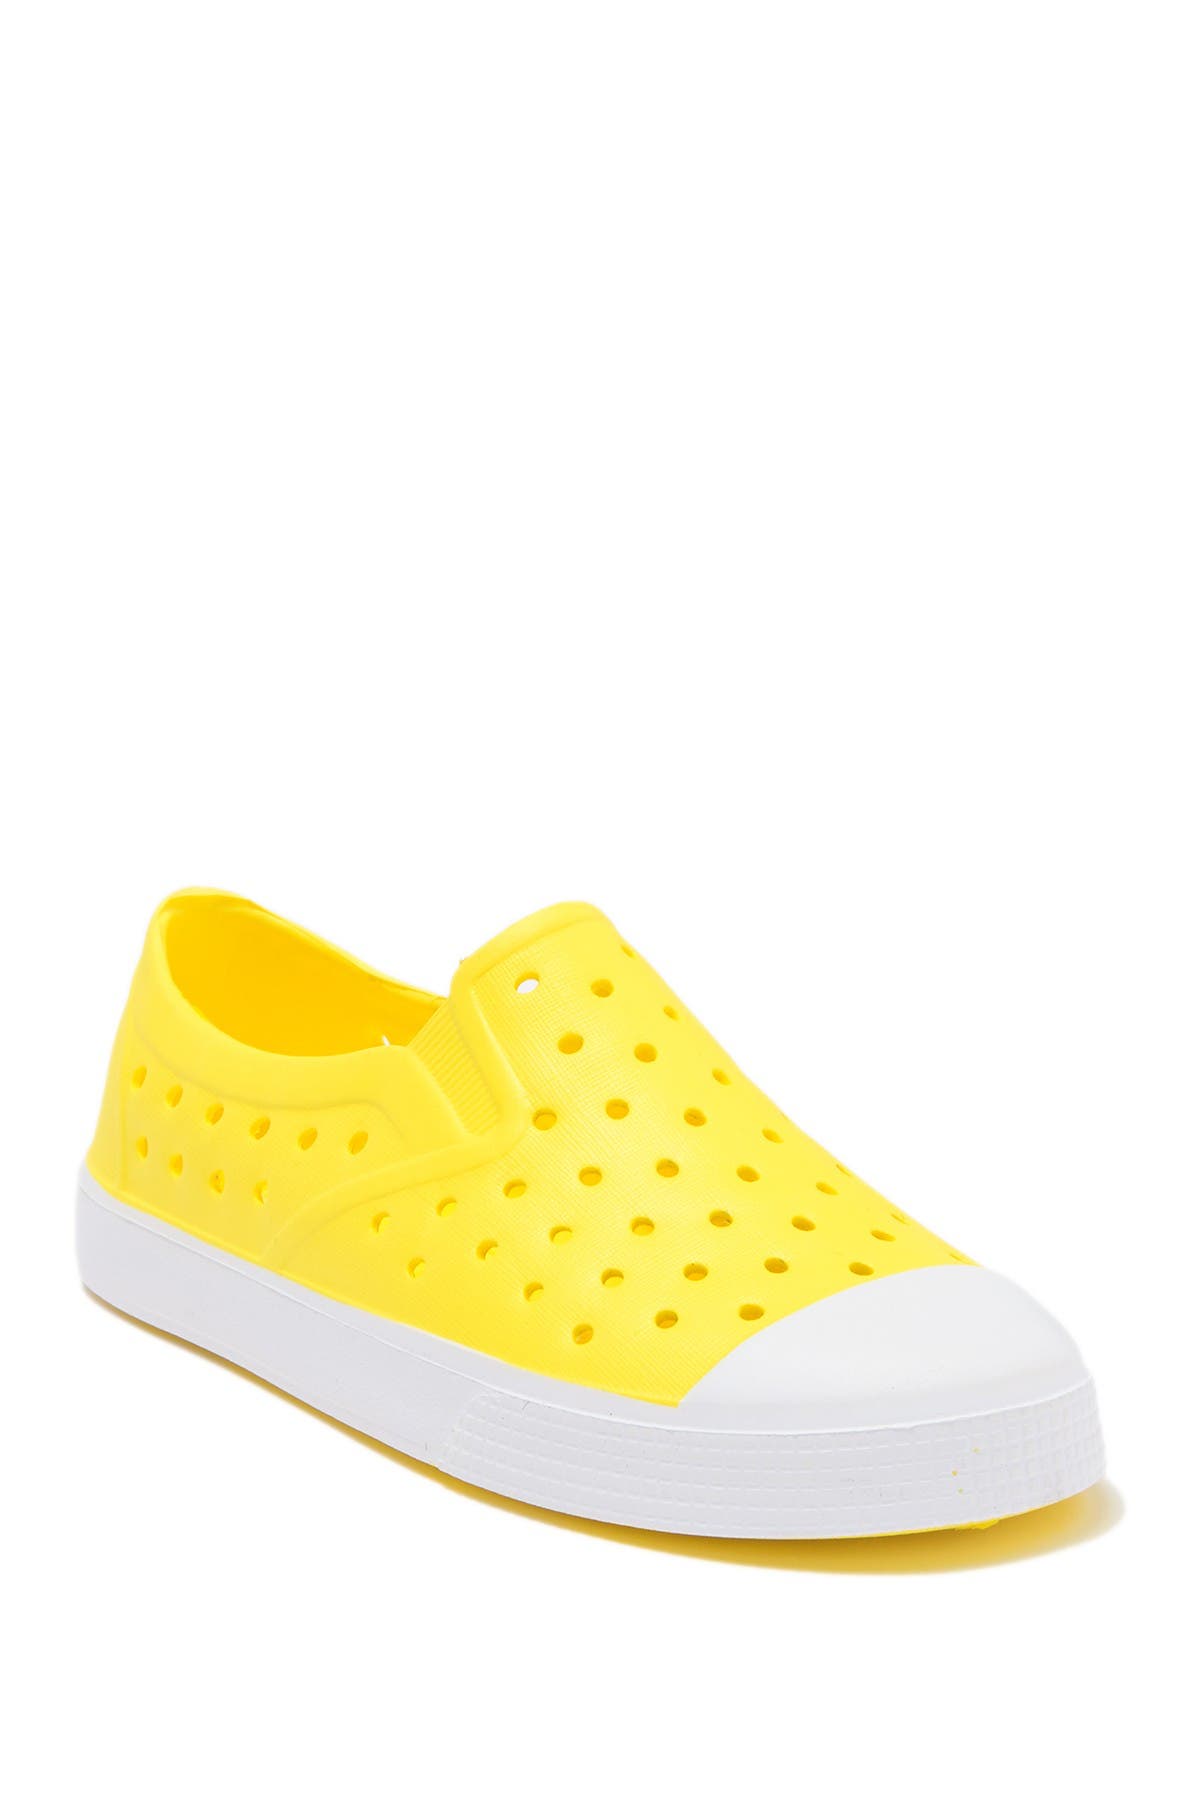 Harper Canyon Kids' Eva Surfer Boy Perforated Slip-on Sneaker In Light/pastel Yellow